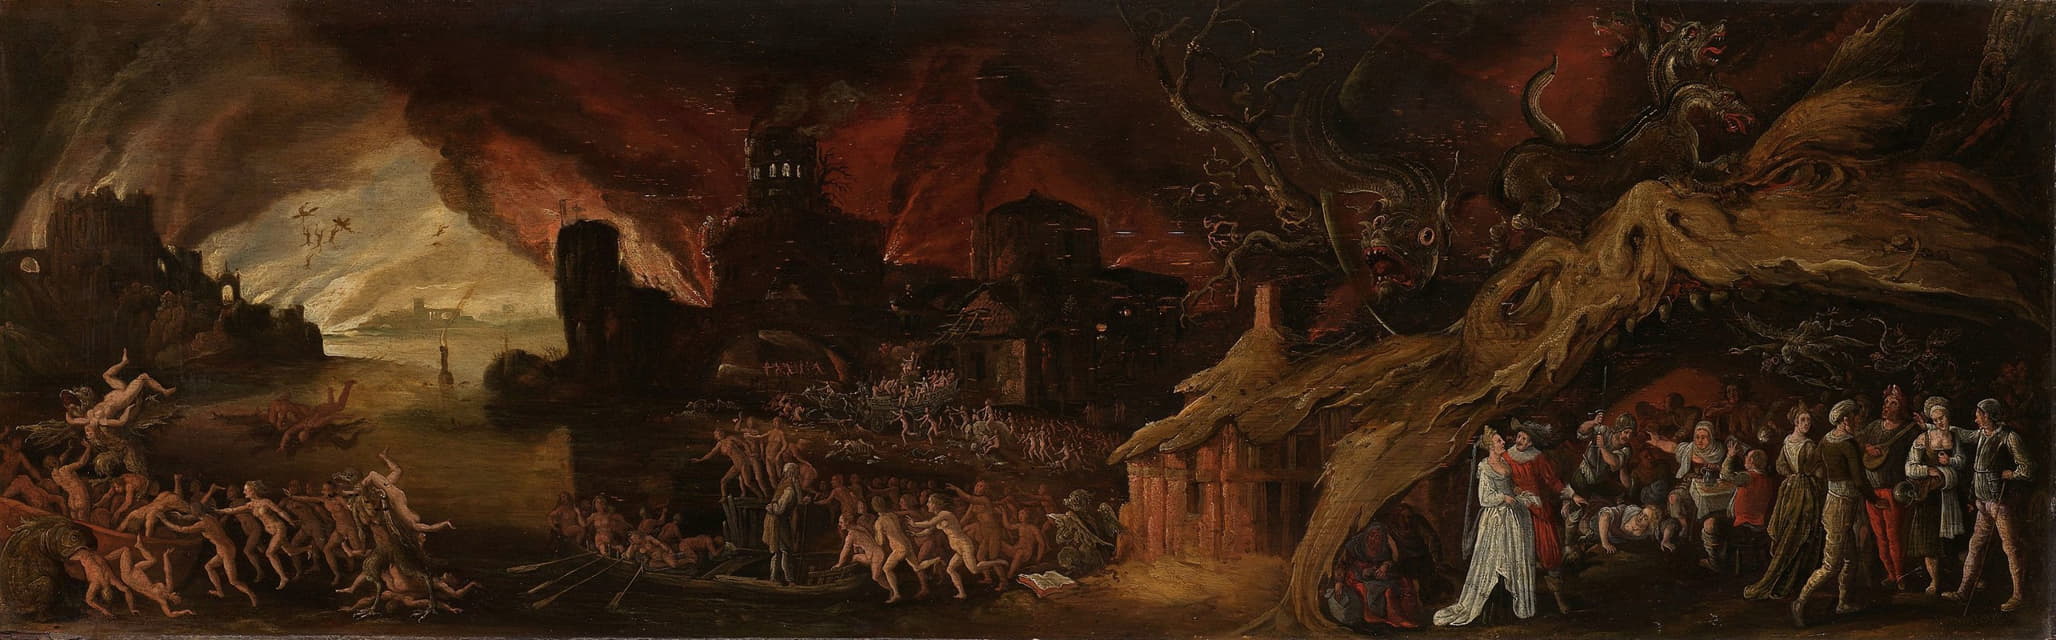 Jacob Isaacsz. van Swanenburg - The Last Judgment and the Seven Deadly Sins